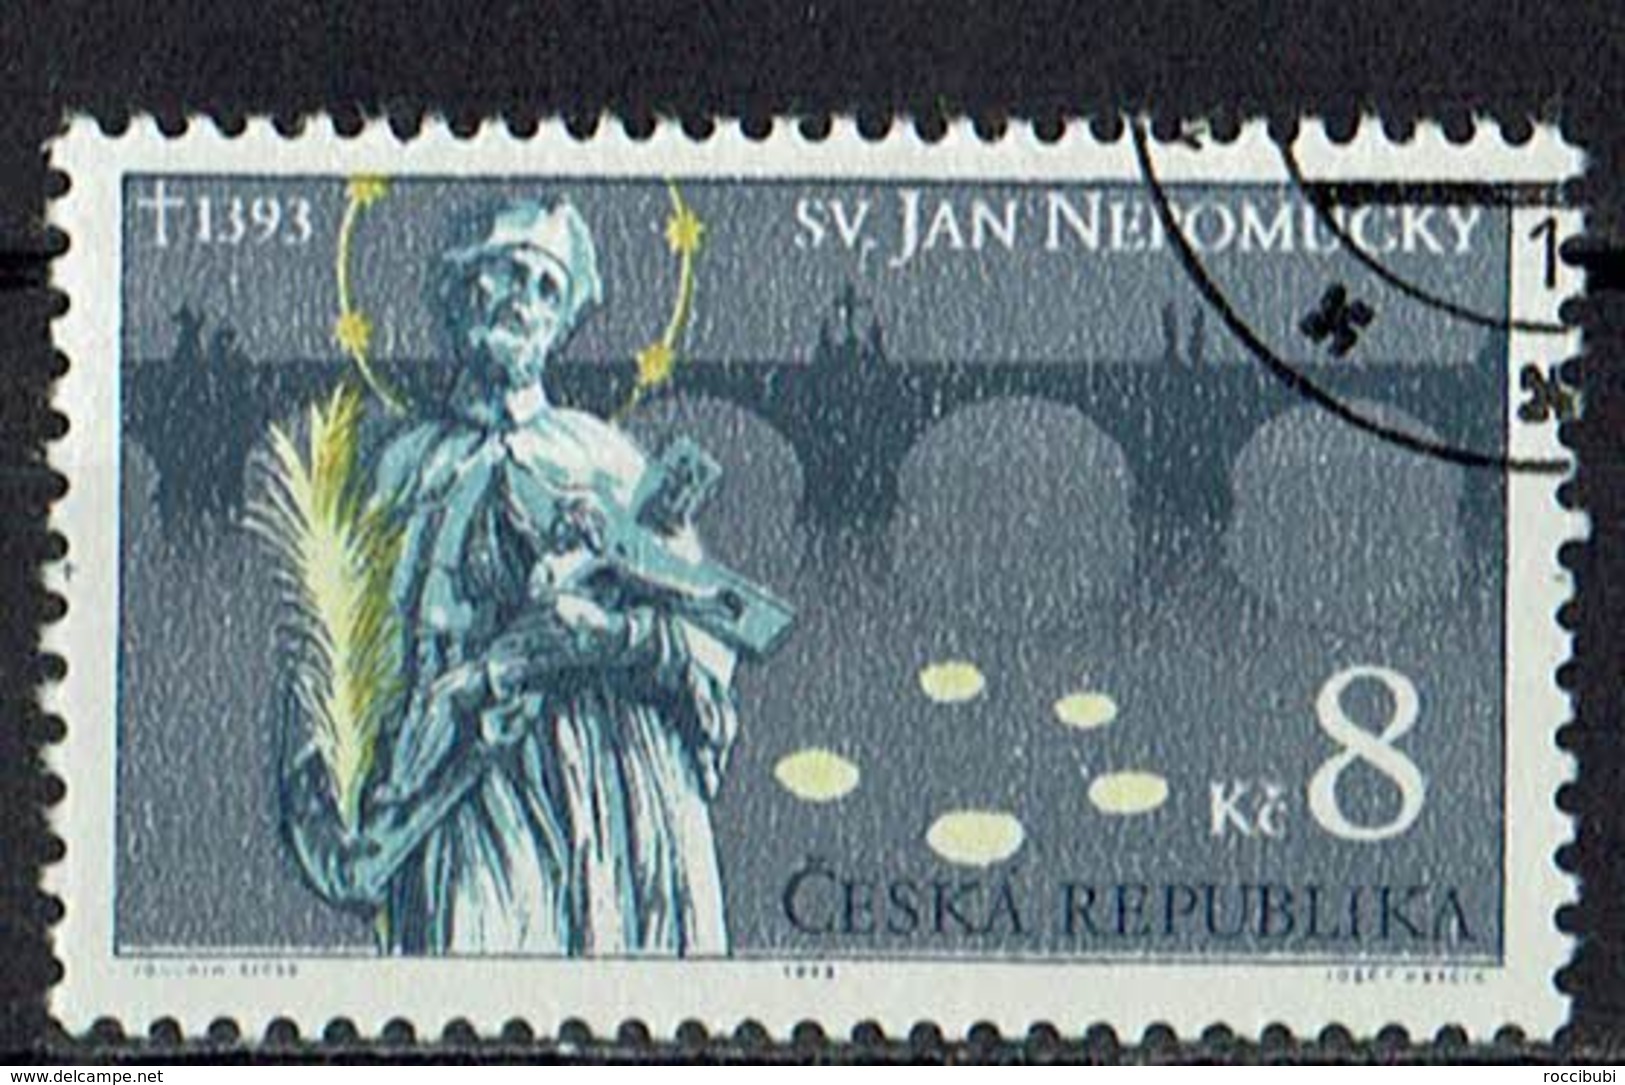 Tschechische Republik 1993 // Mi. 4 O - Used Stamps